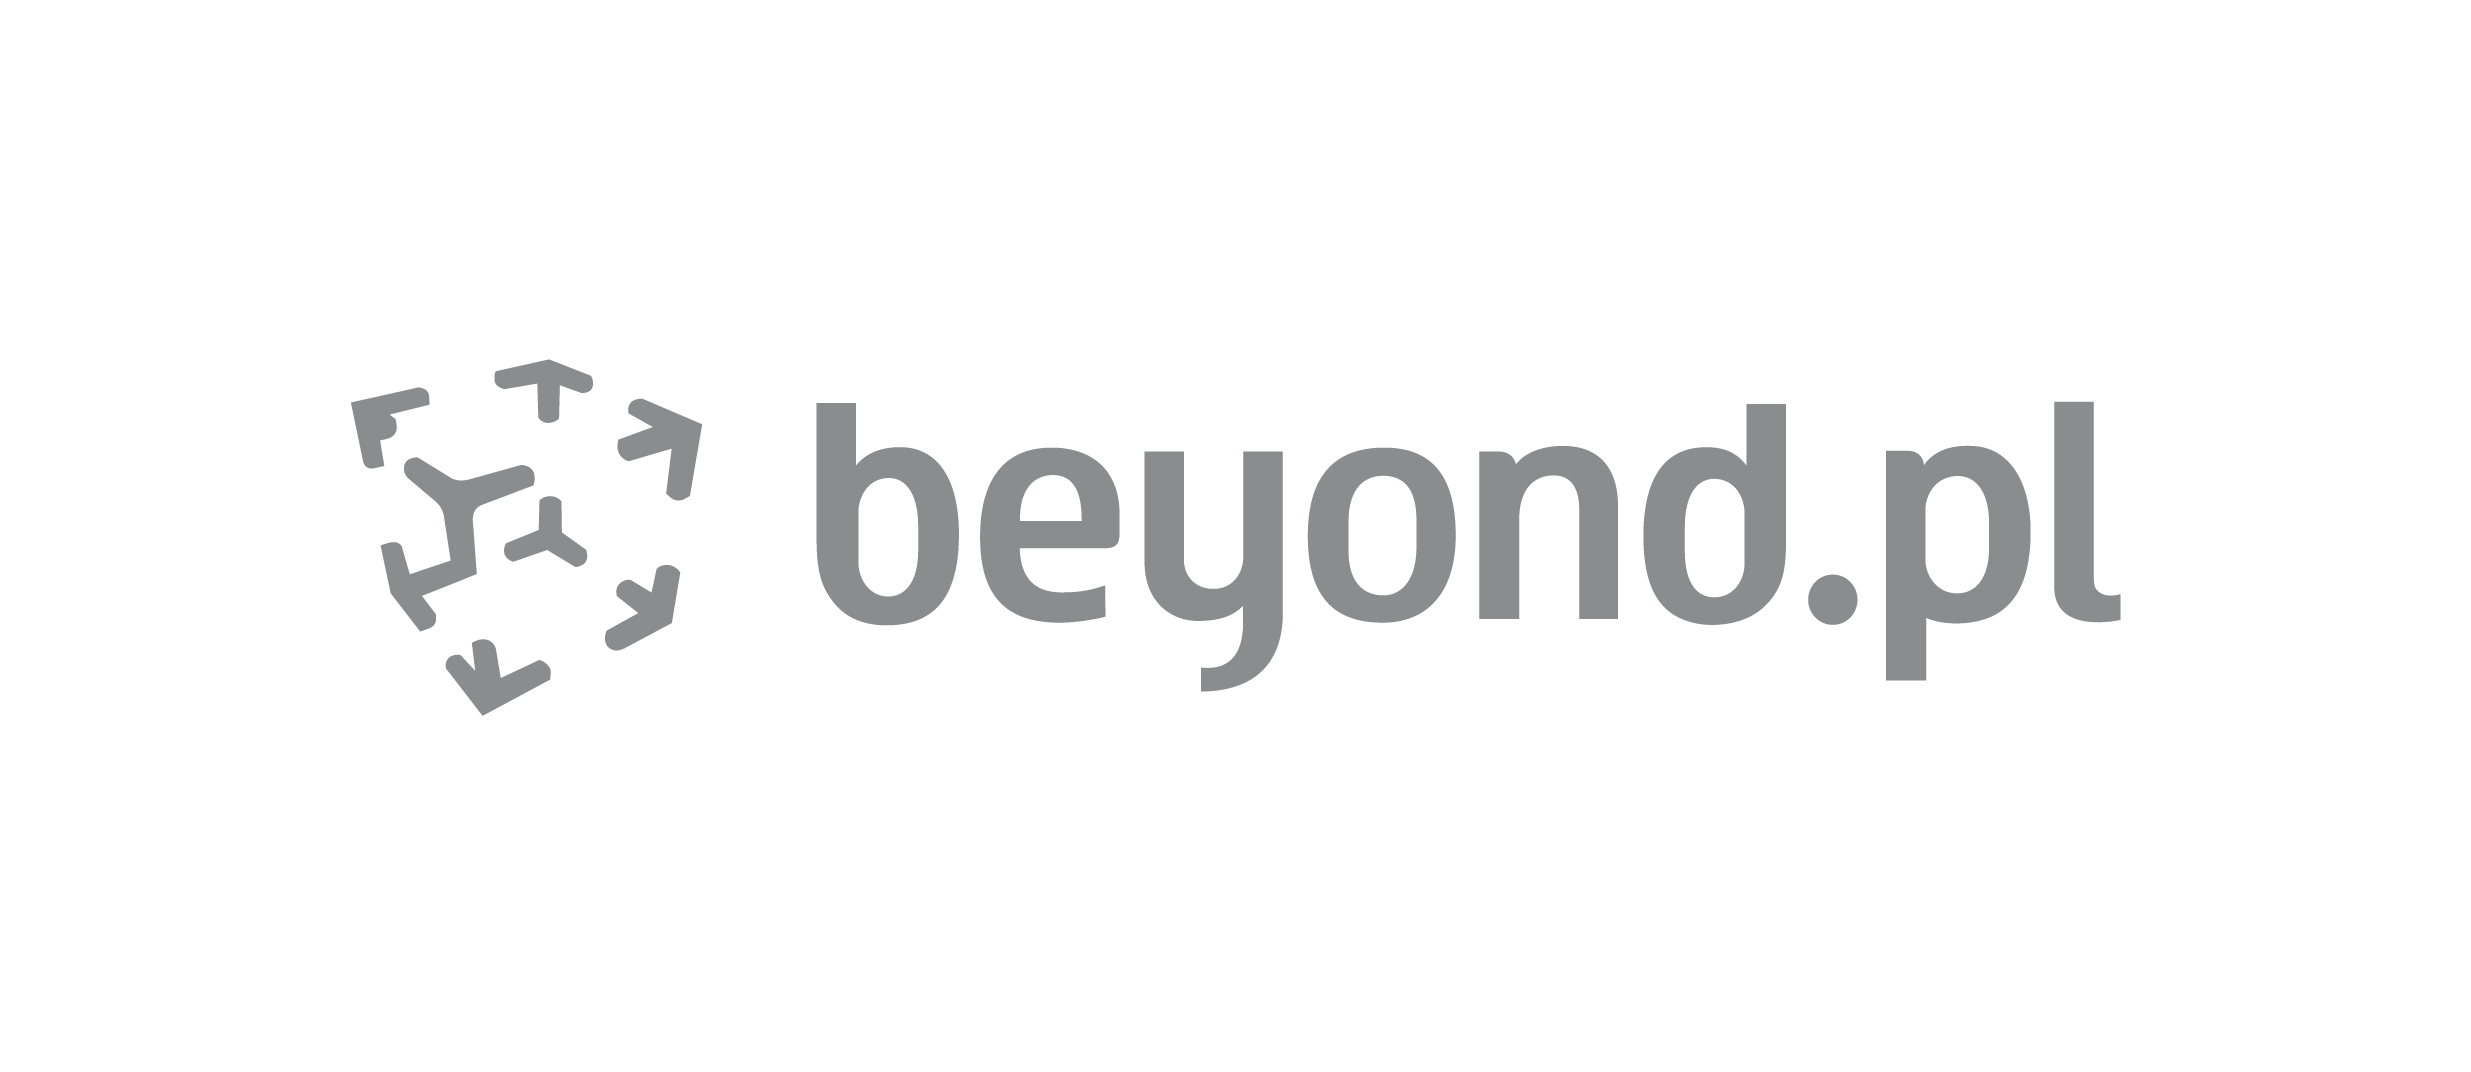 Beyond.pl